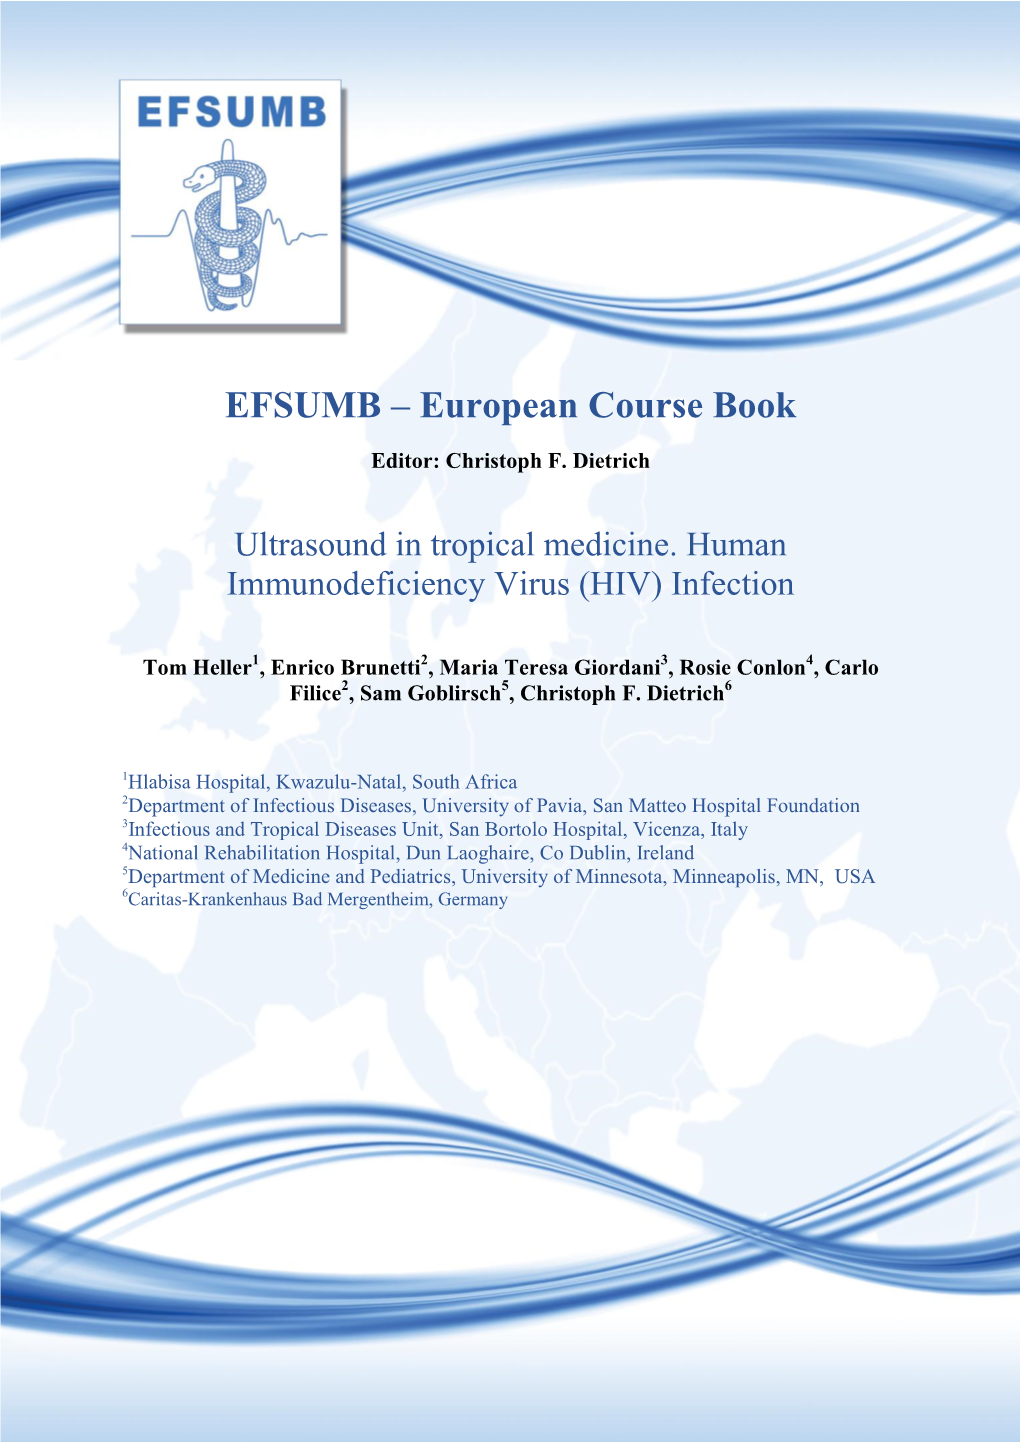 EFSUMB – European Course Book